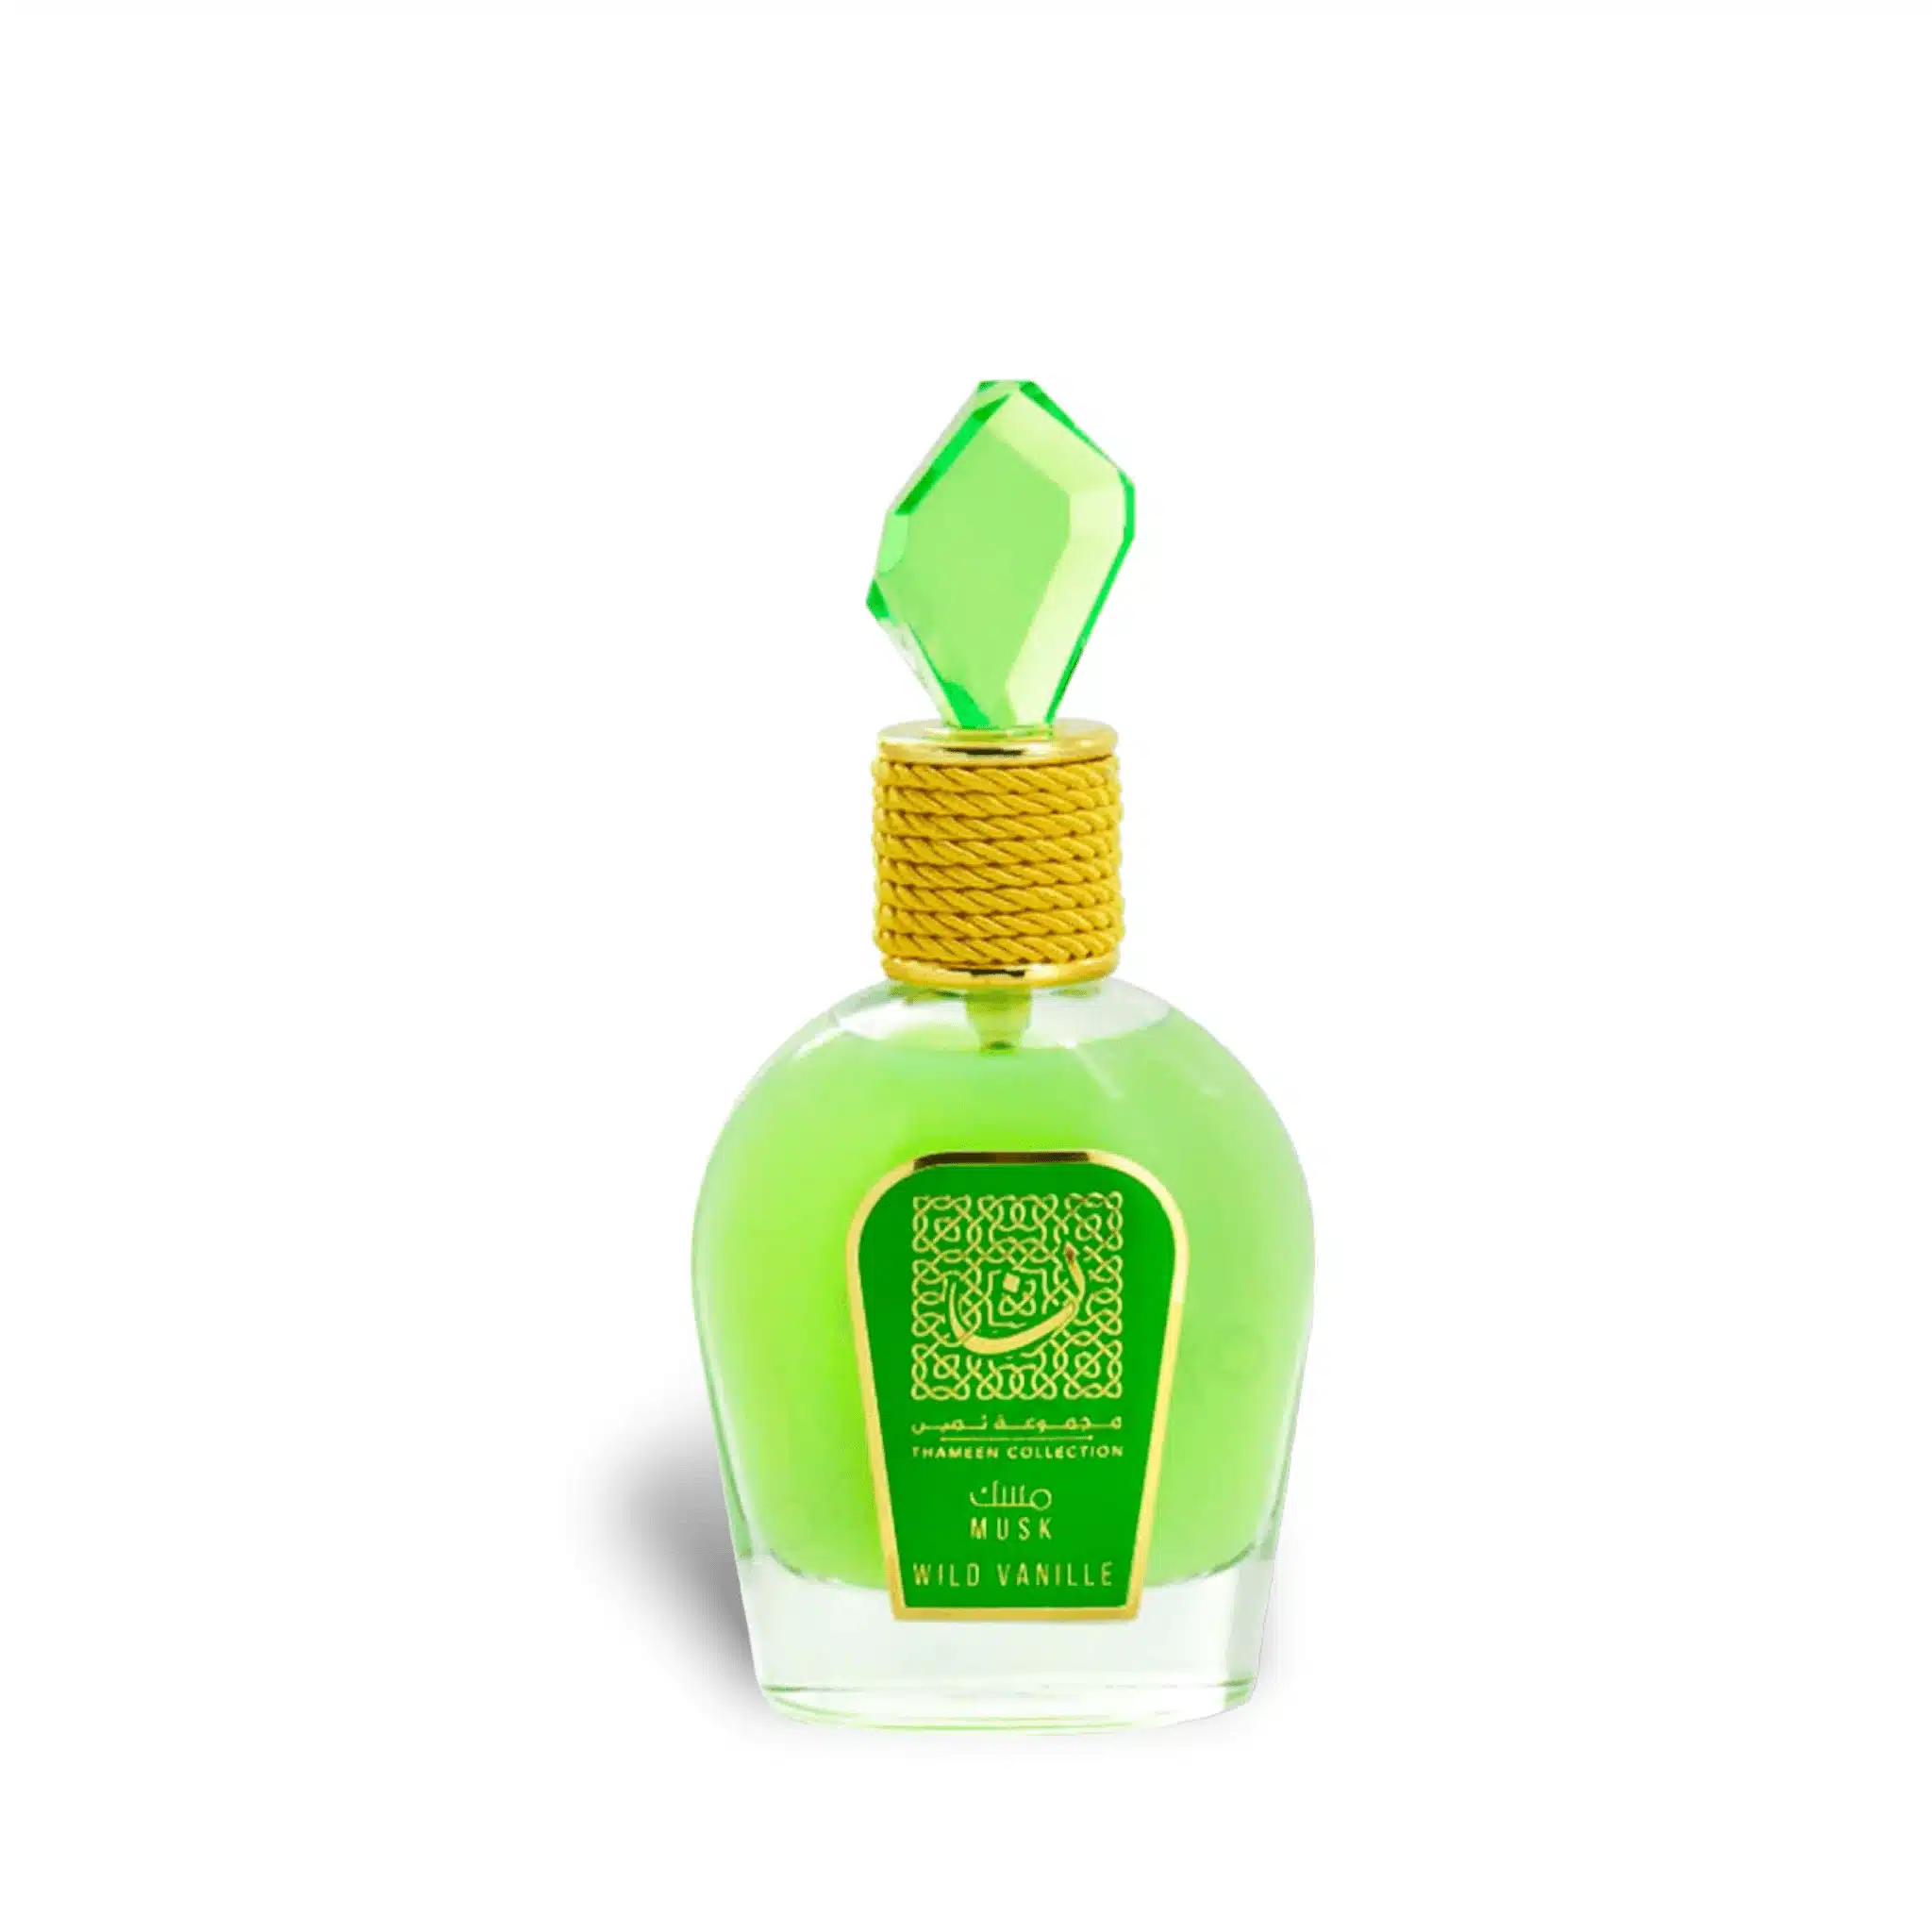 Musk Wild Vanille (Thameen Collection) Perfume Eau De Parfum 100Ml By Lattafa